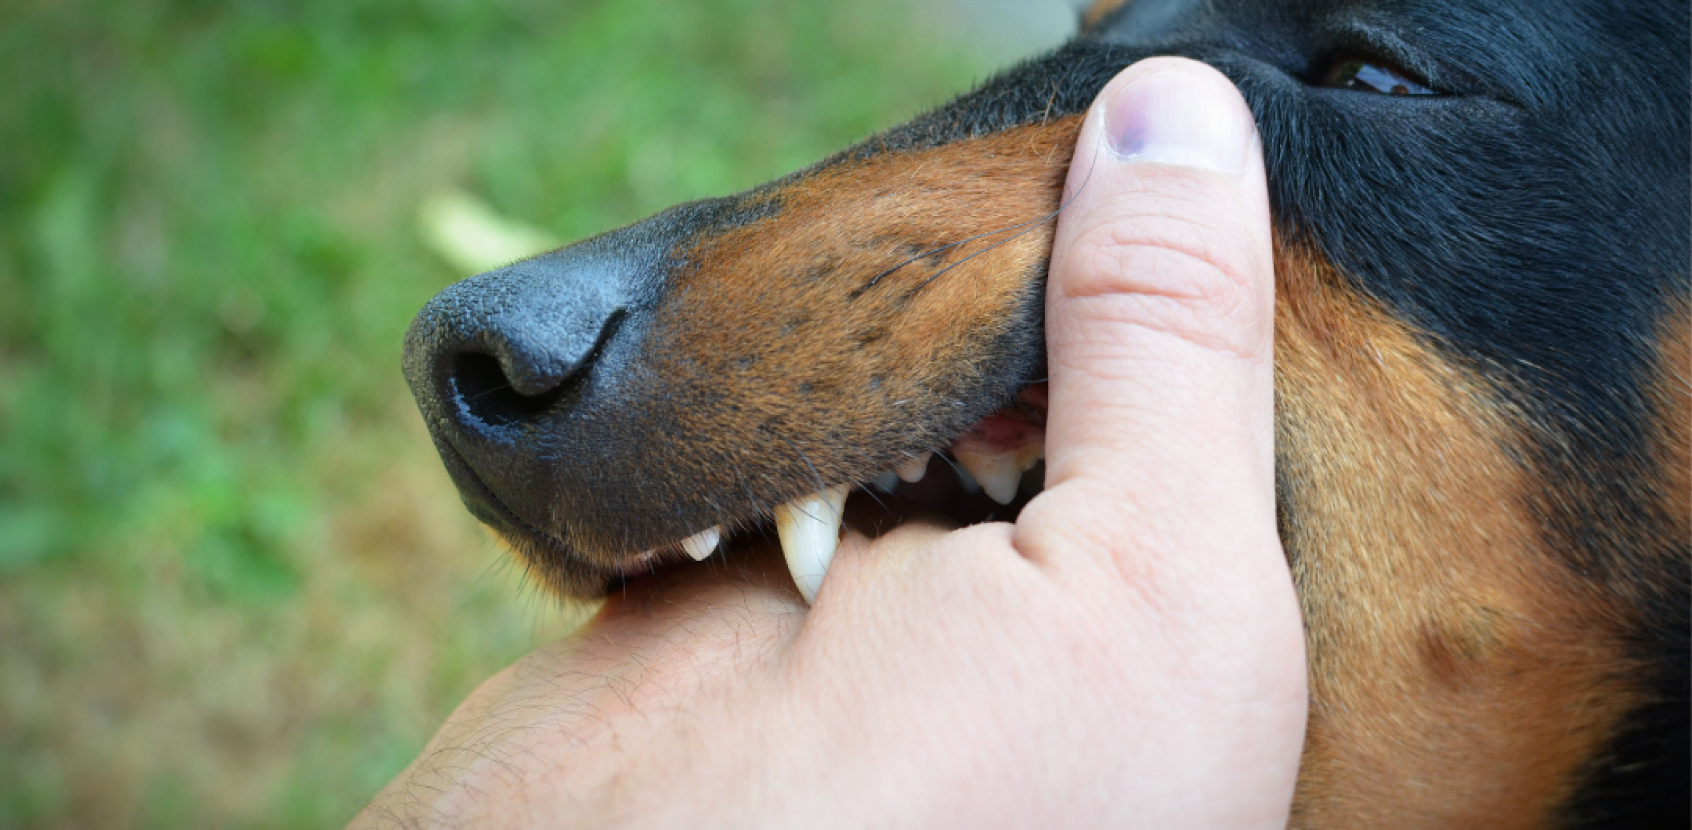 dog bite lawsuit image